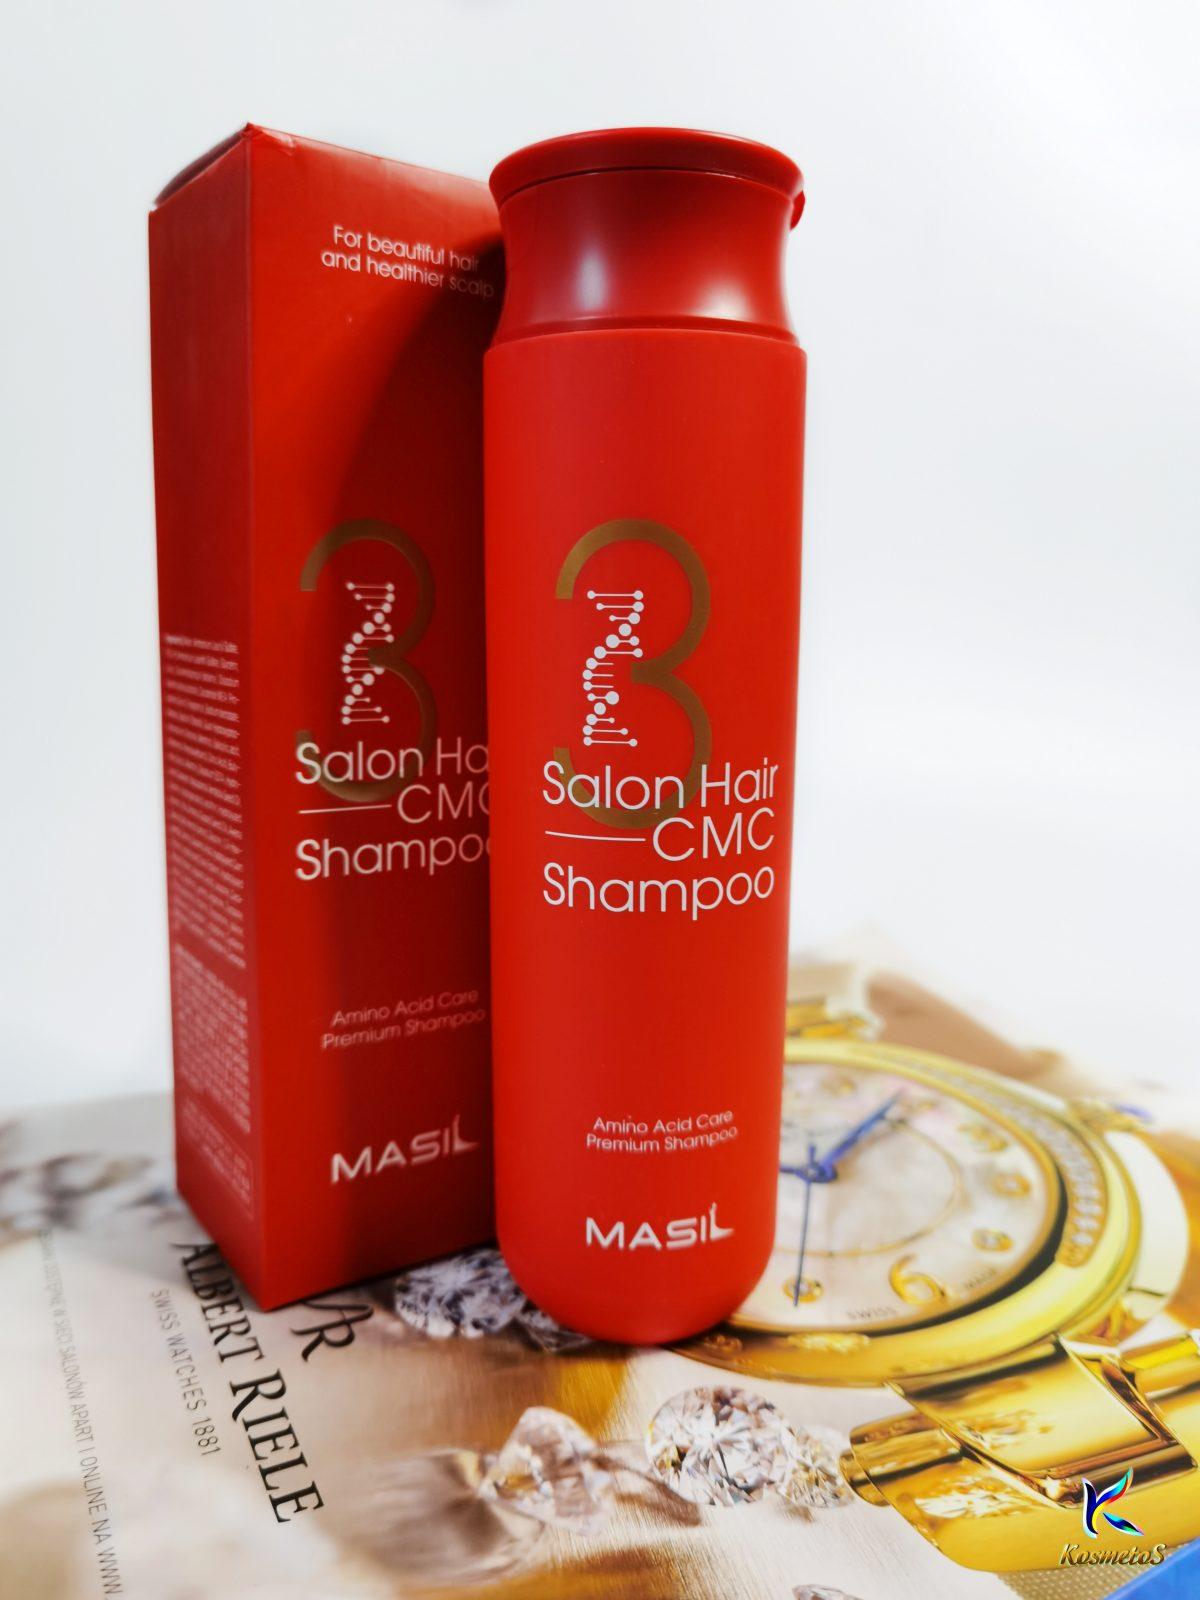 profesjonalny szampon z salonu